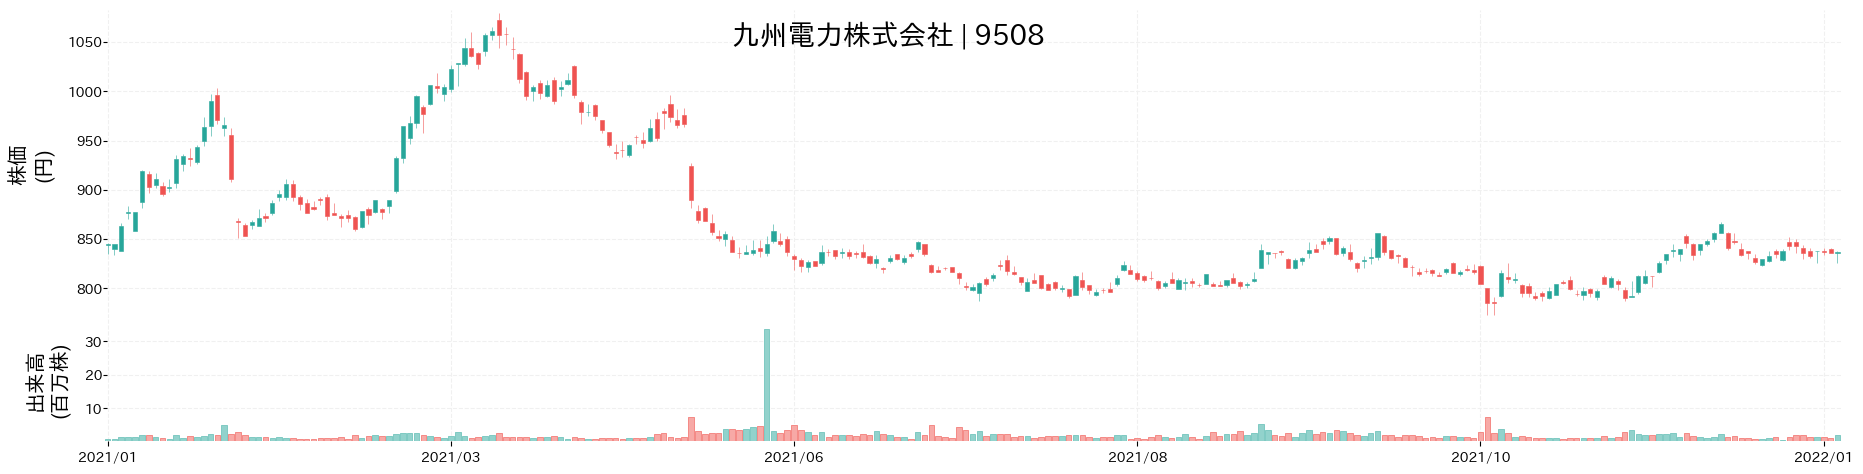 九州電力の株価推移(2021)